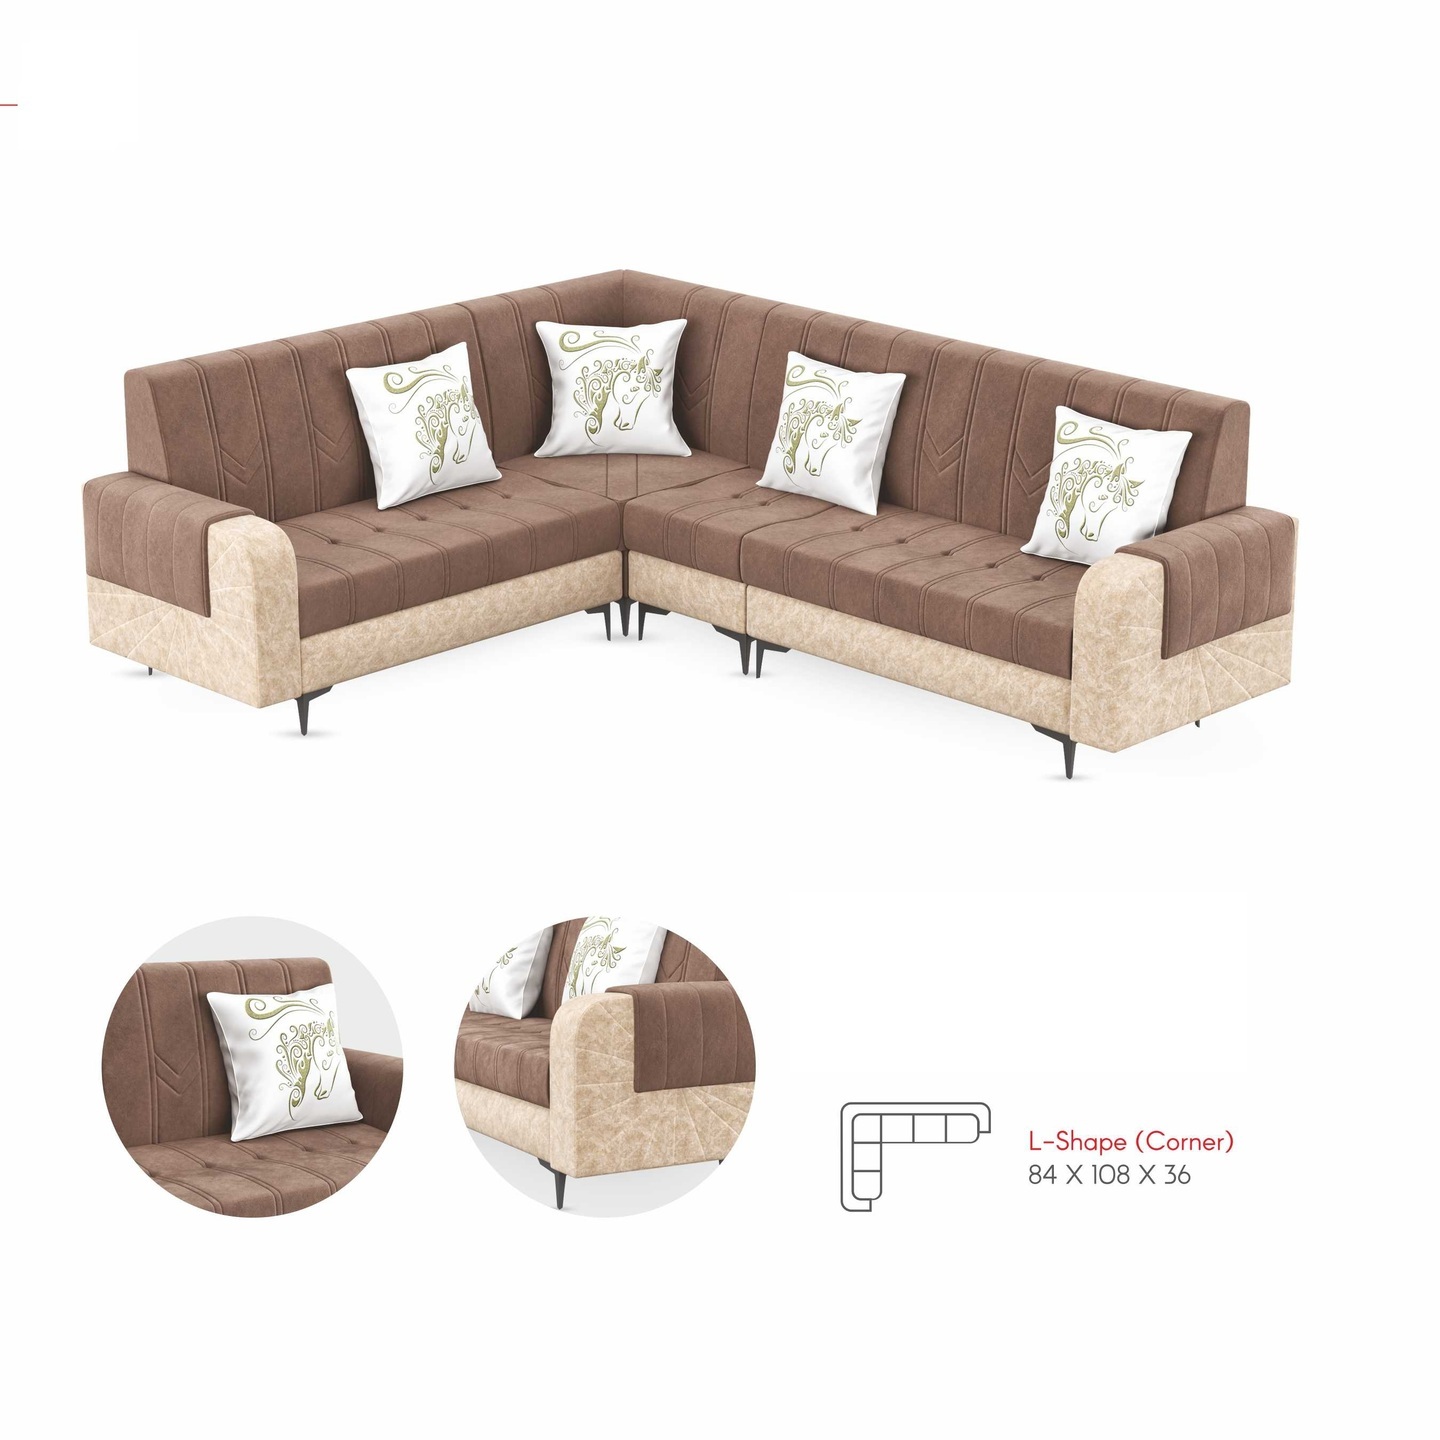 RLF Corner Sofa Set C-06 In Brown Colour